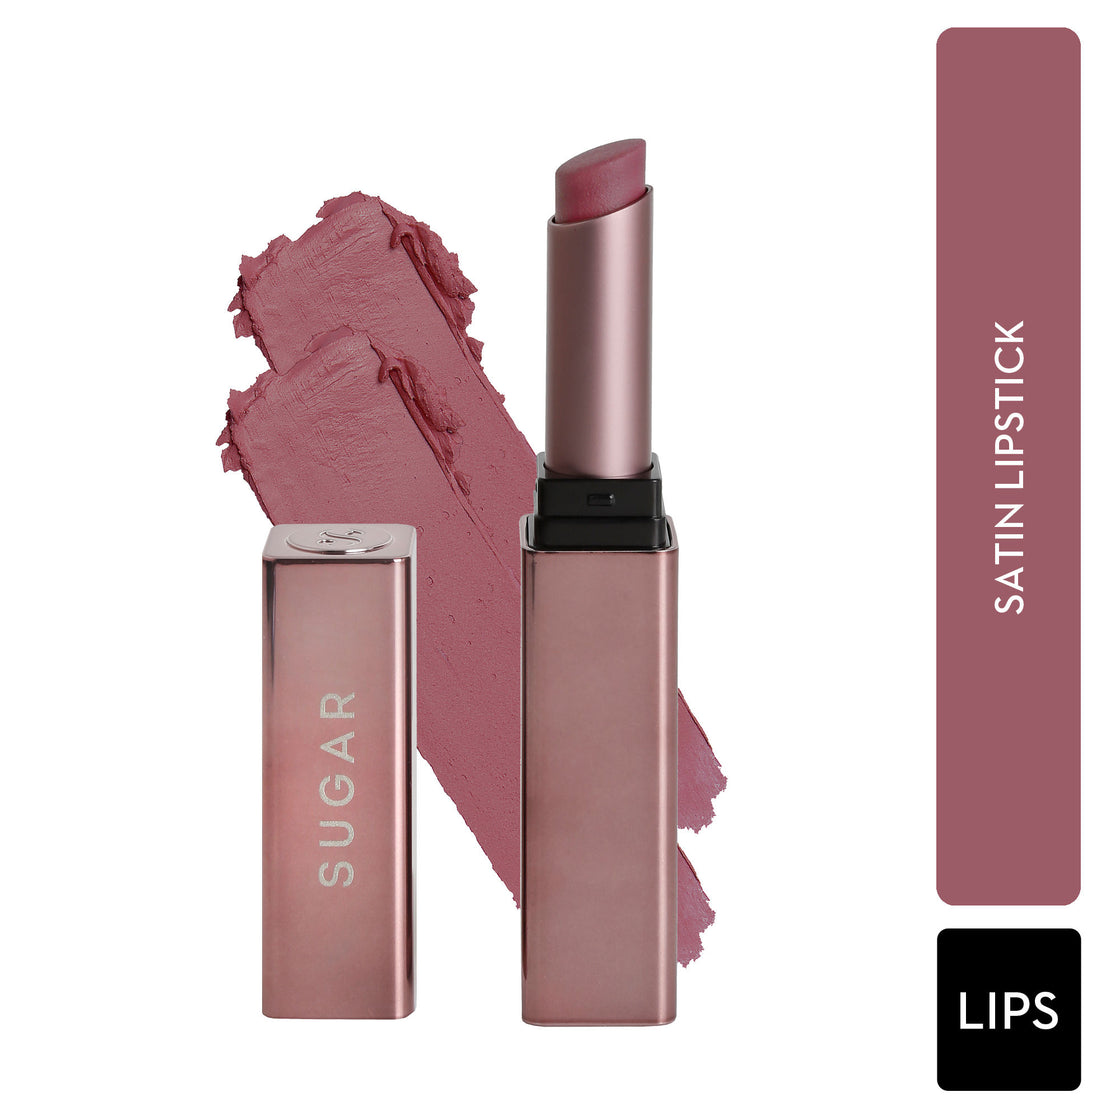 SUGAR Mettle Satin Lipstick - 10 Diana (Peachy Pink) (2.2g)